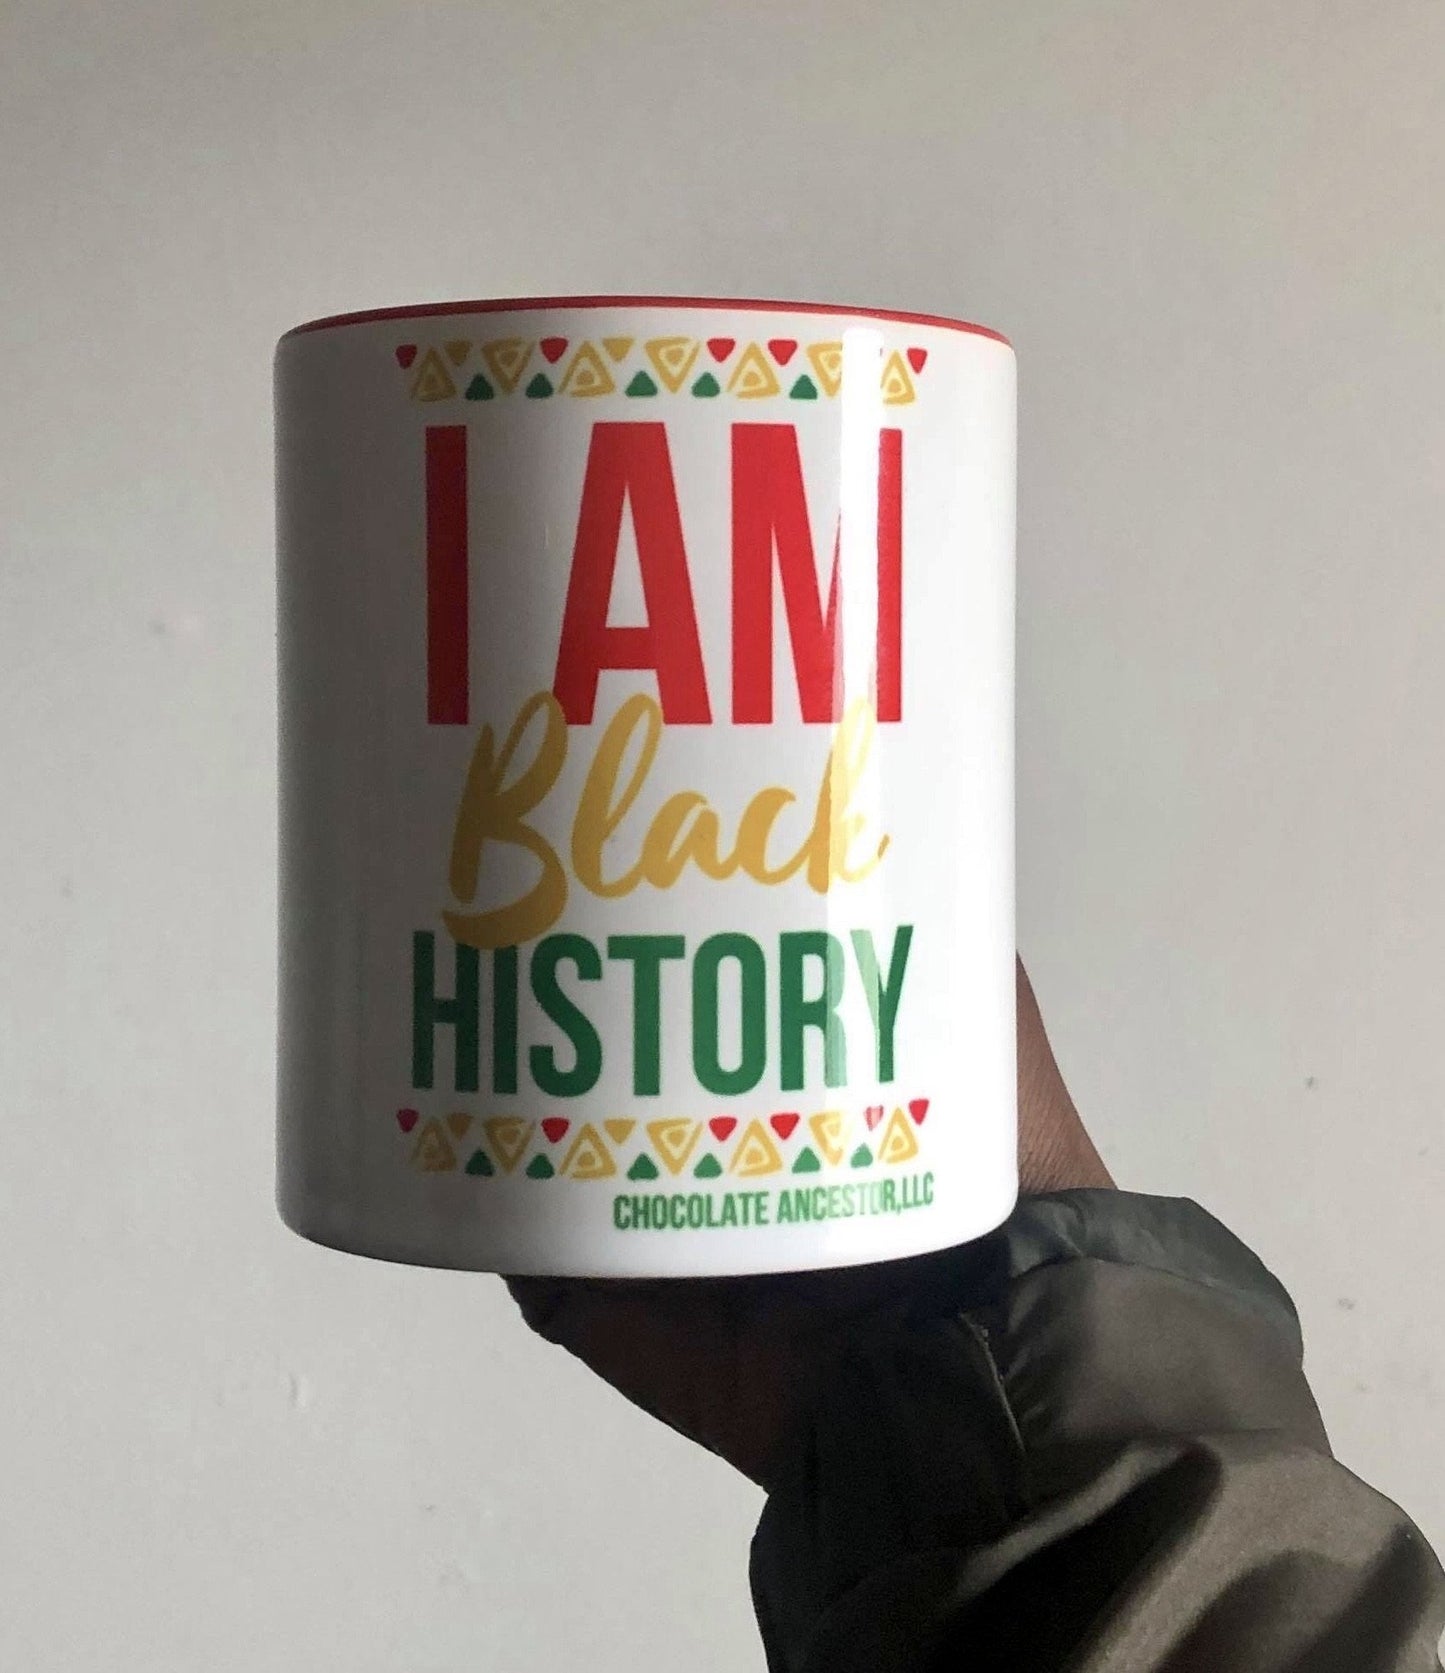 I Am Black History Mug with Color Inside - Chocolate Ancestor